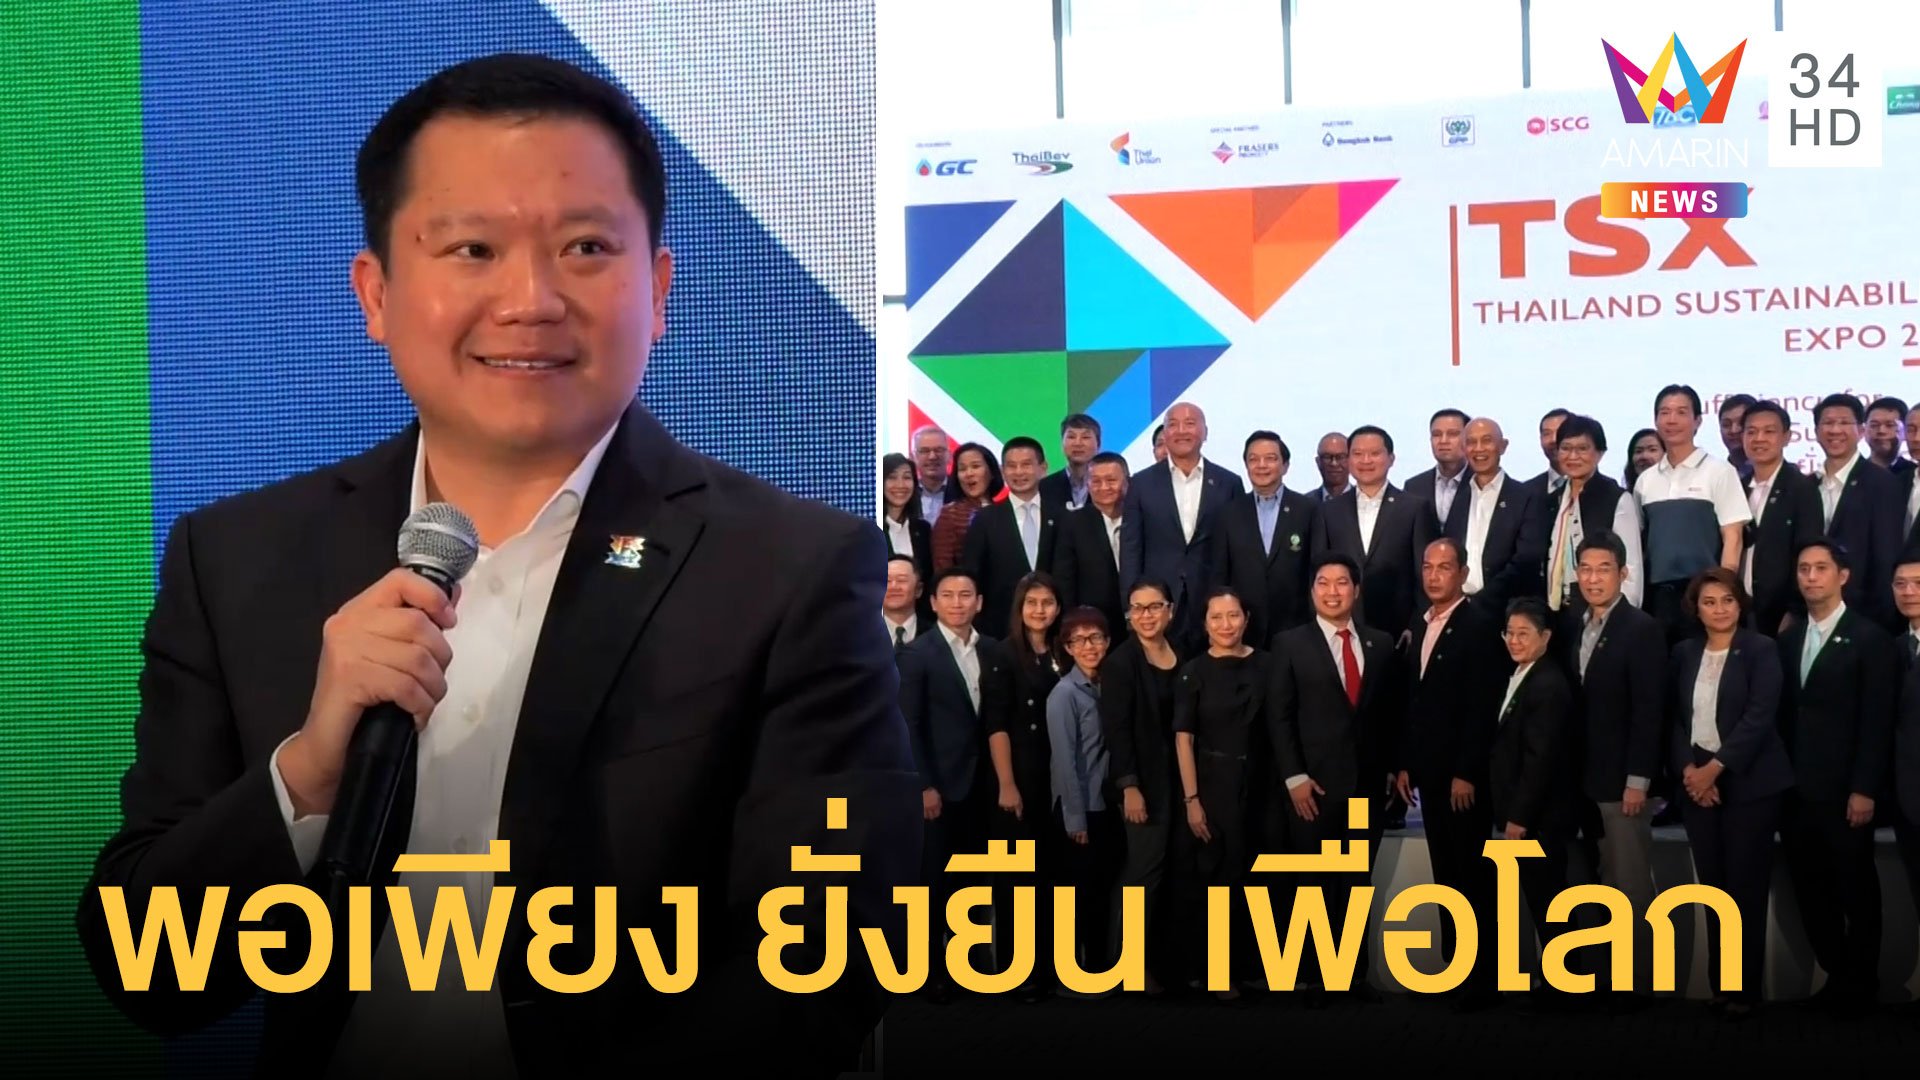  Thailand Sustainability Expo 2020 พอเพียง ยั่งยืน เพื่อโลก | ข่าวอรุณอมรินทร์ | 4 ต.ค. 63 | AMARIN TVHD34